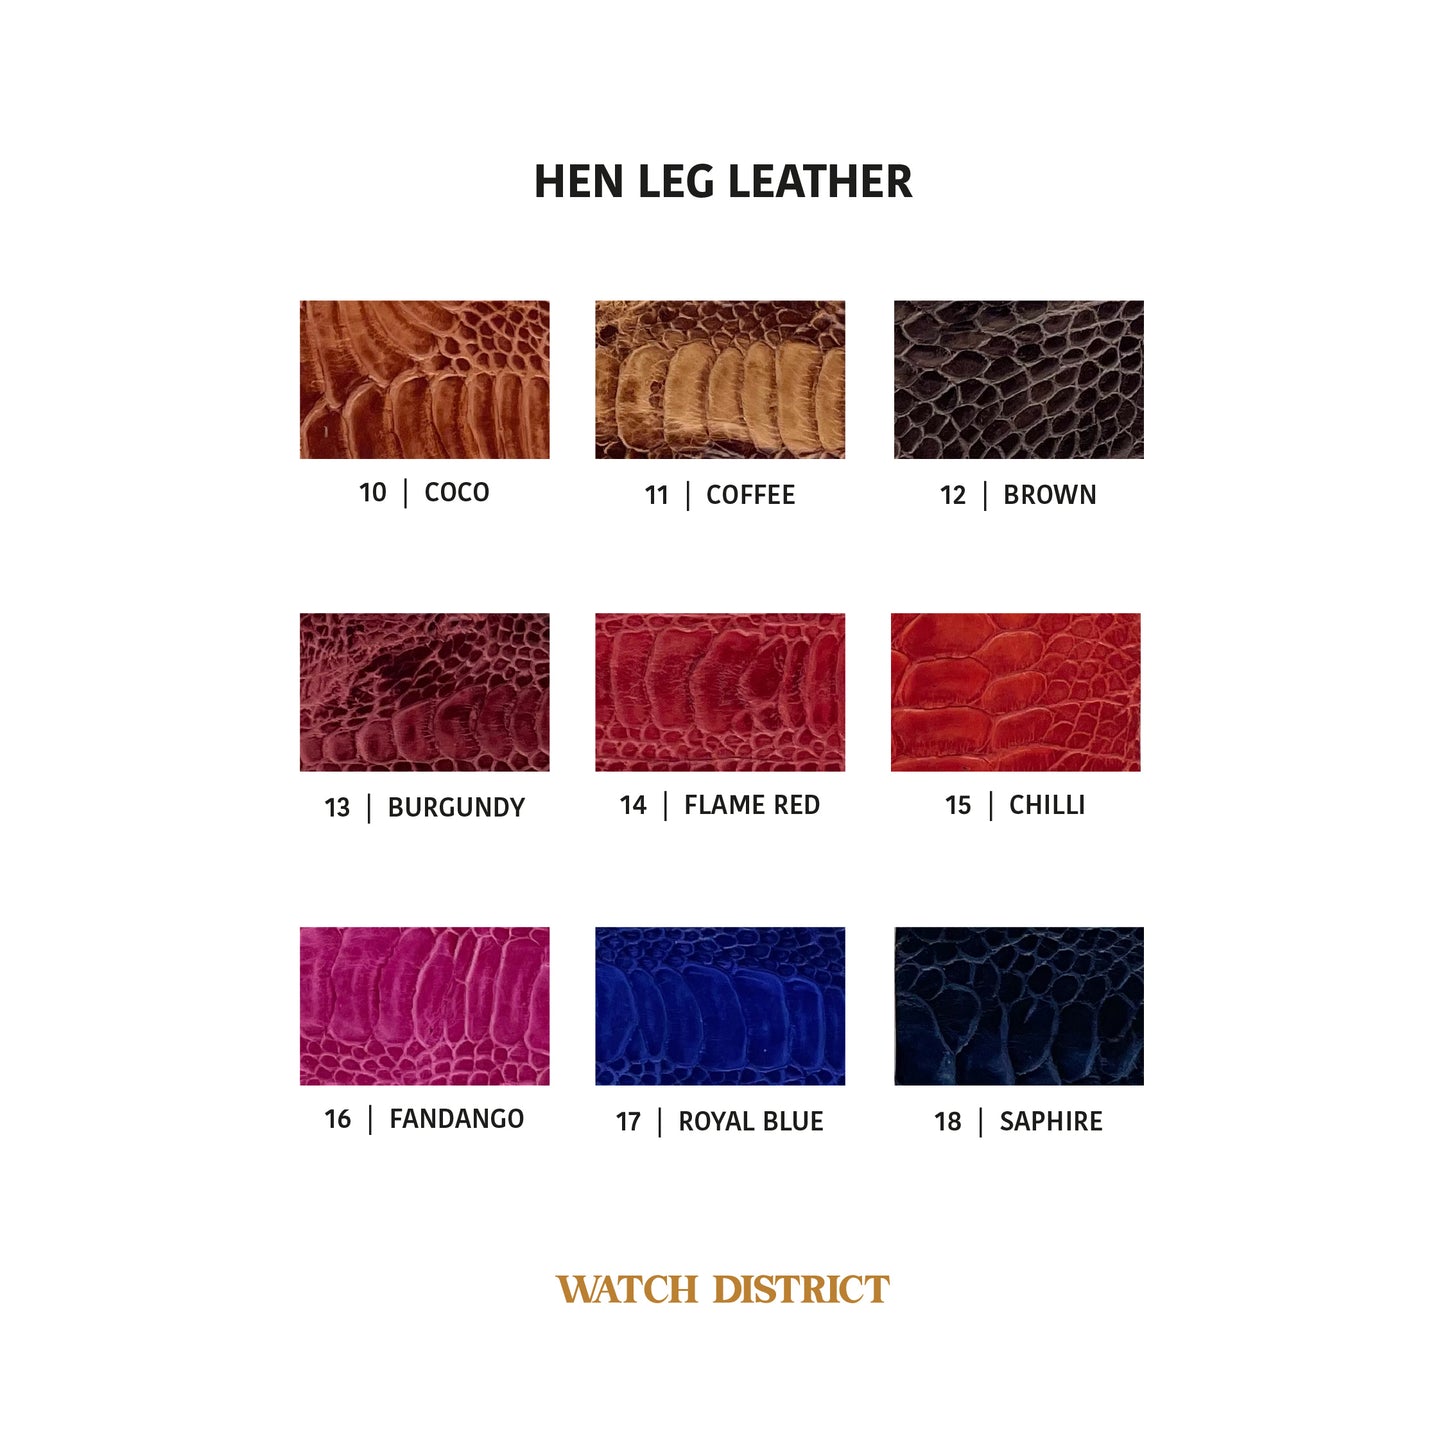 Hen Leg Leather